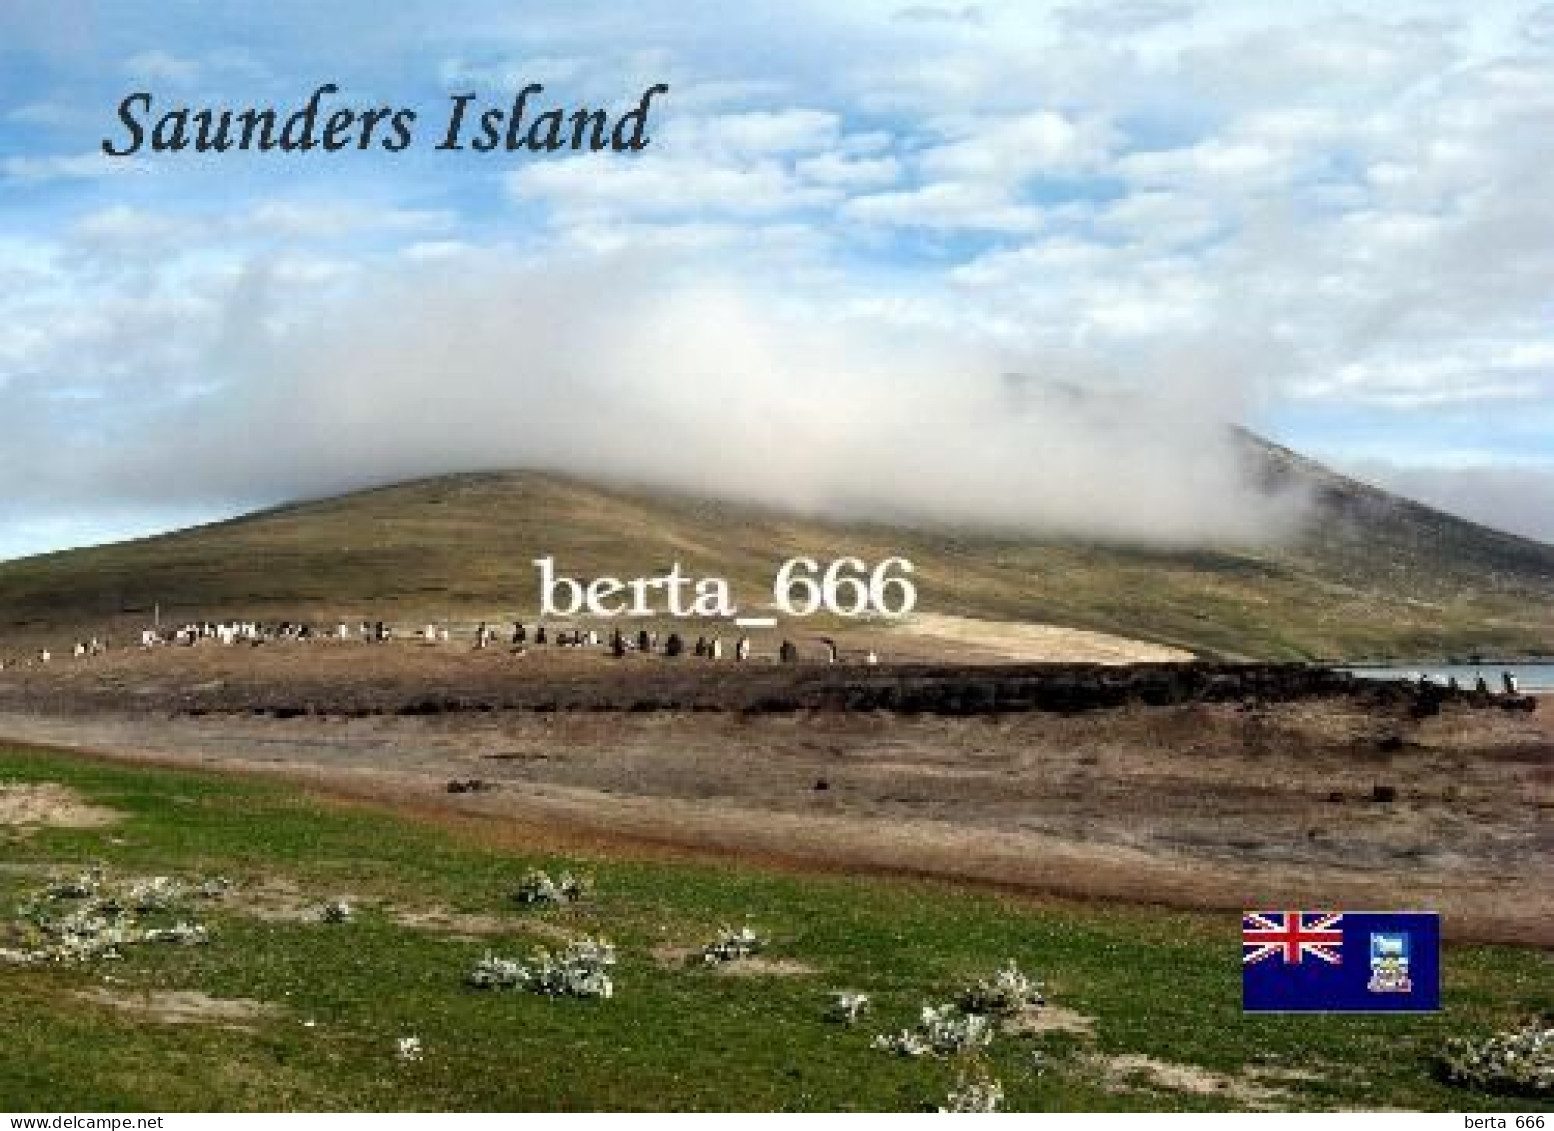 Falklands Islands Saunders Island Malvinas New Postcard - Falkland Islands